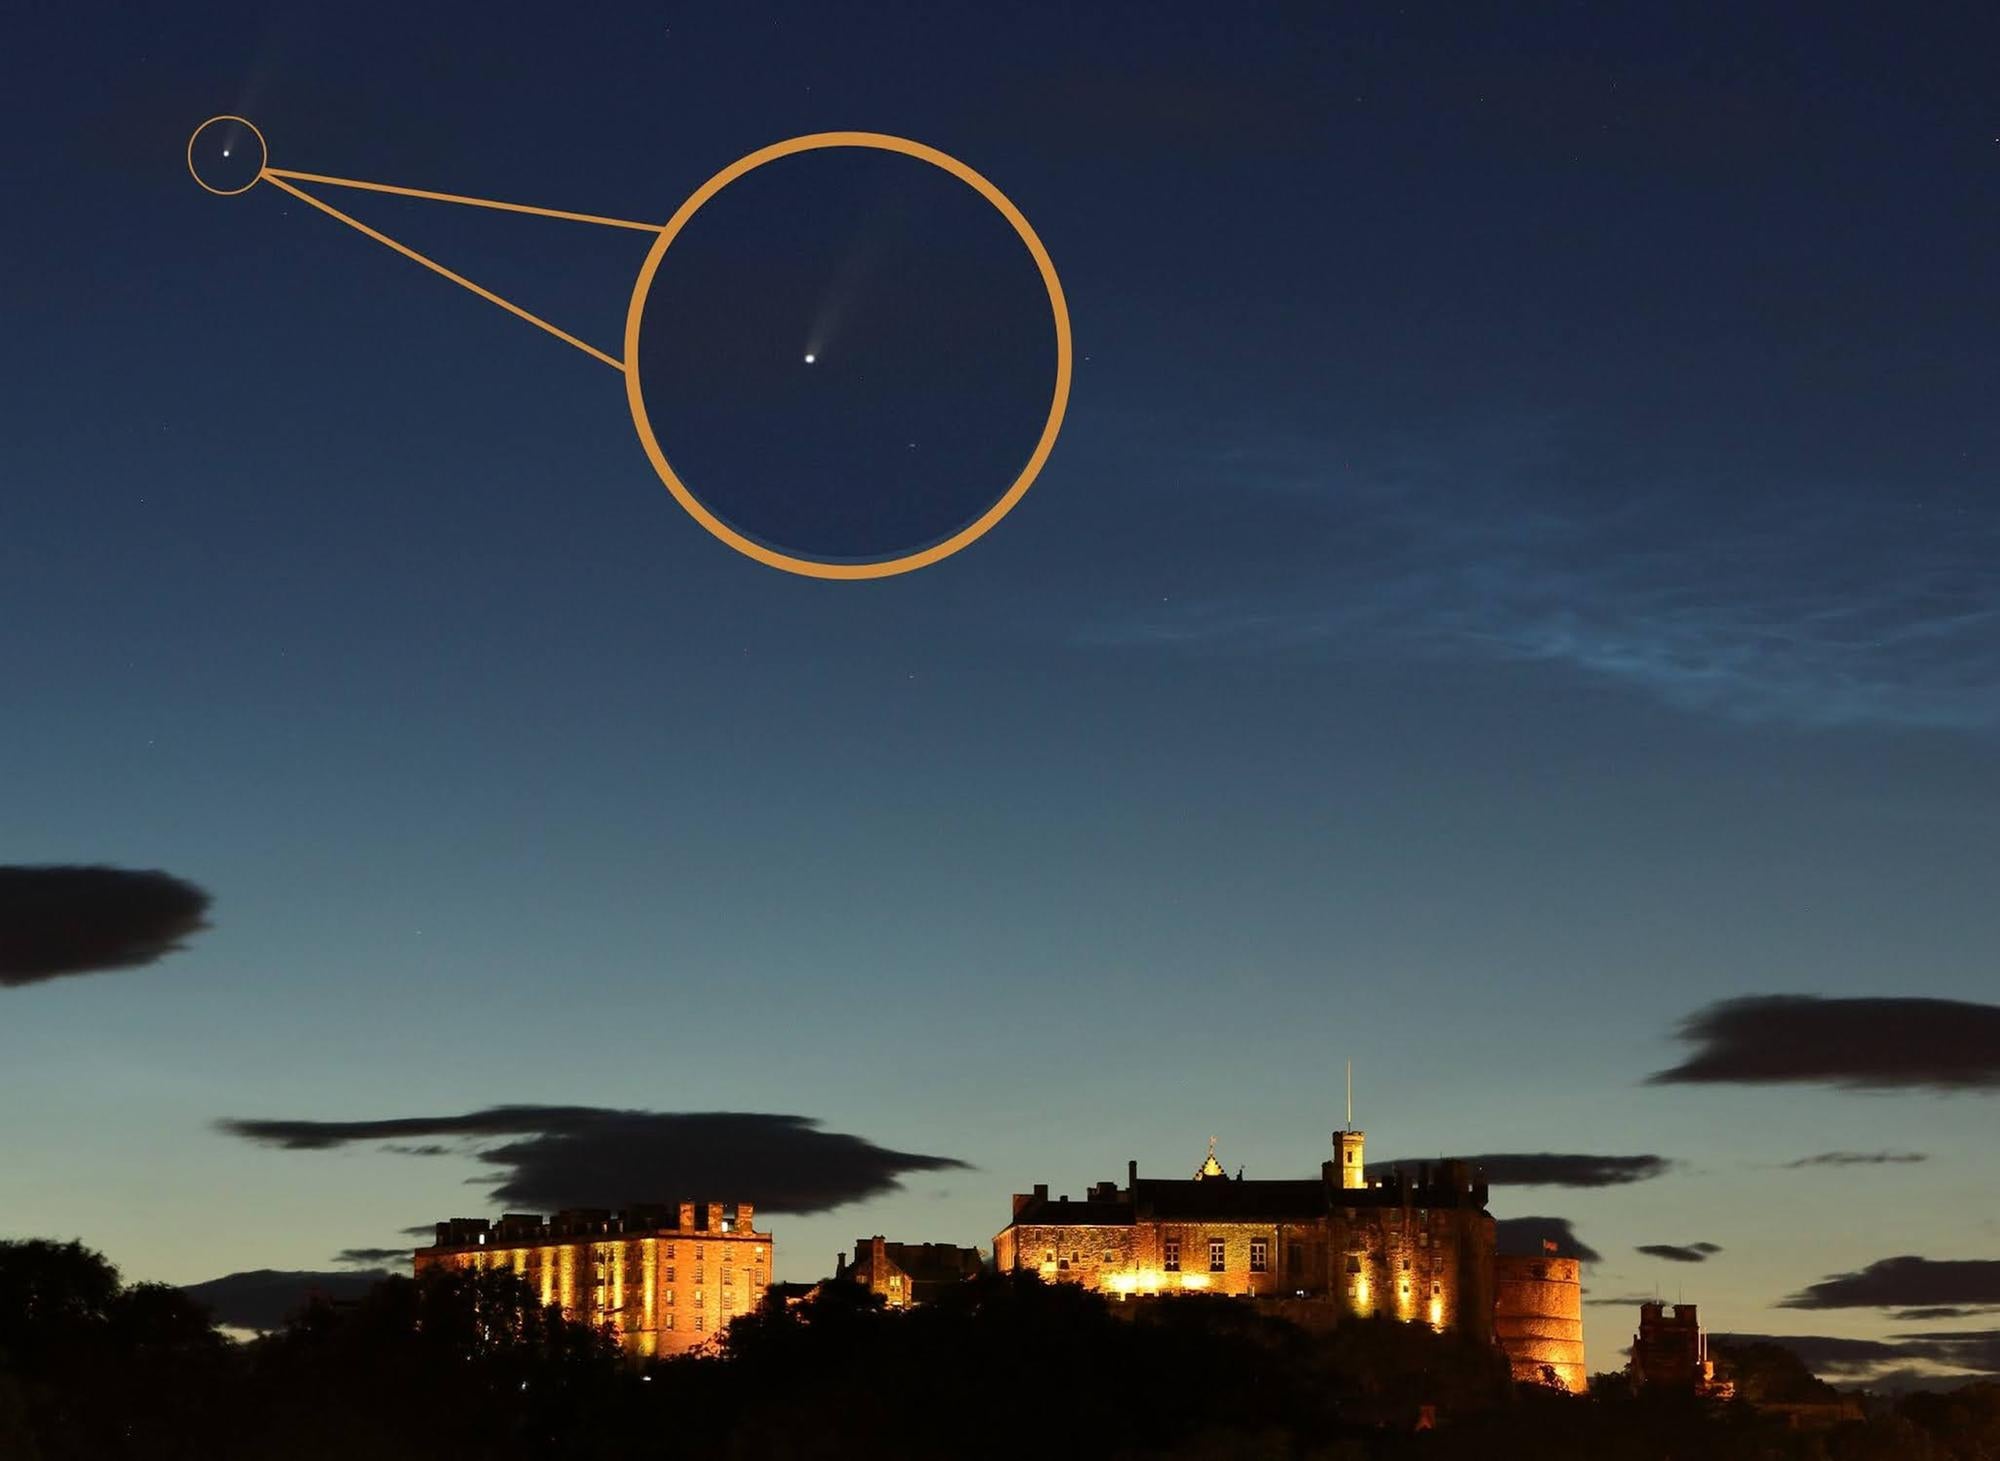 Astonishing photos show Neowise comet flying over Edinburgh Castle